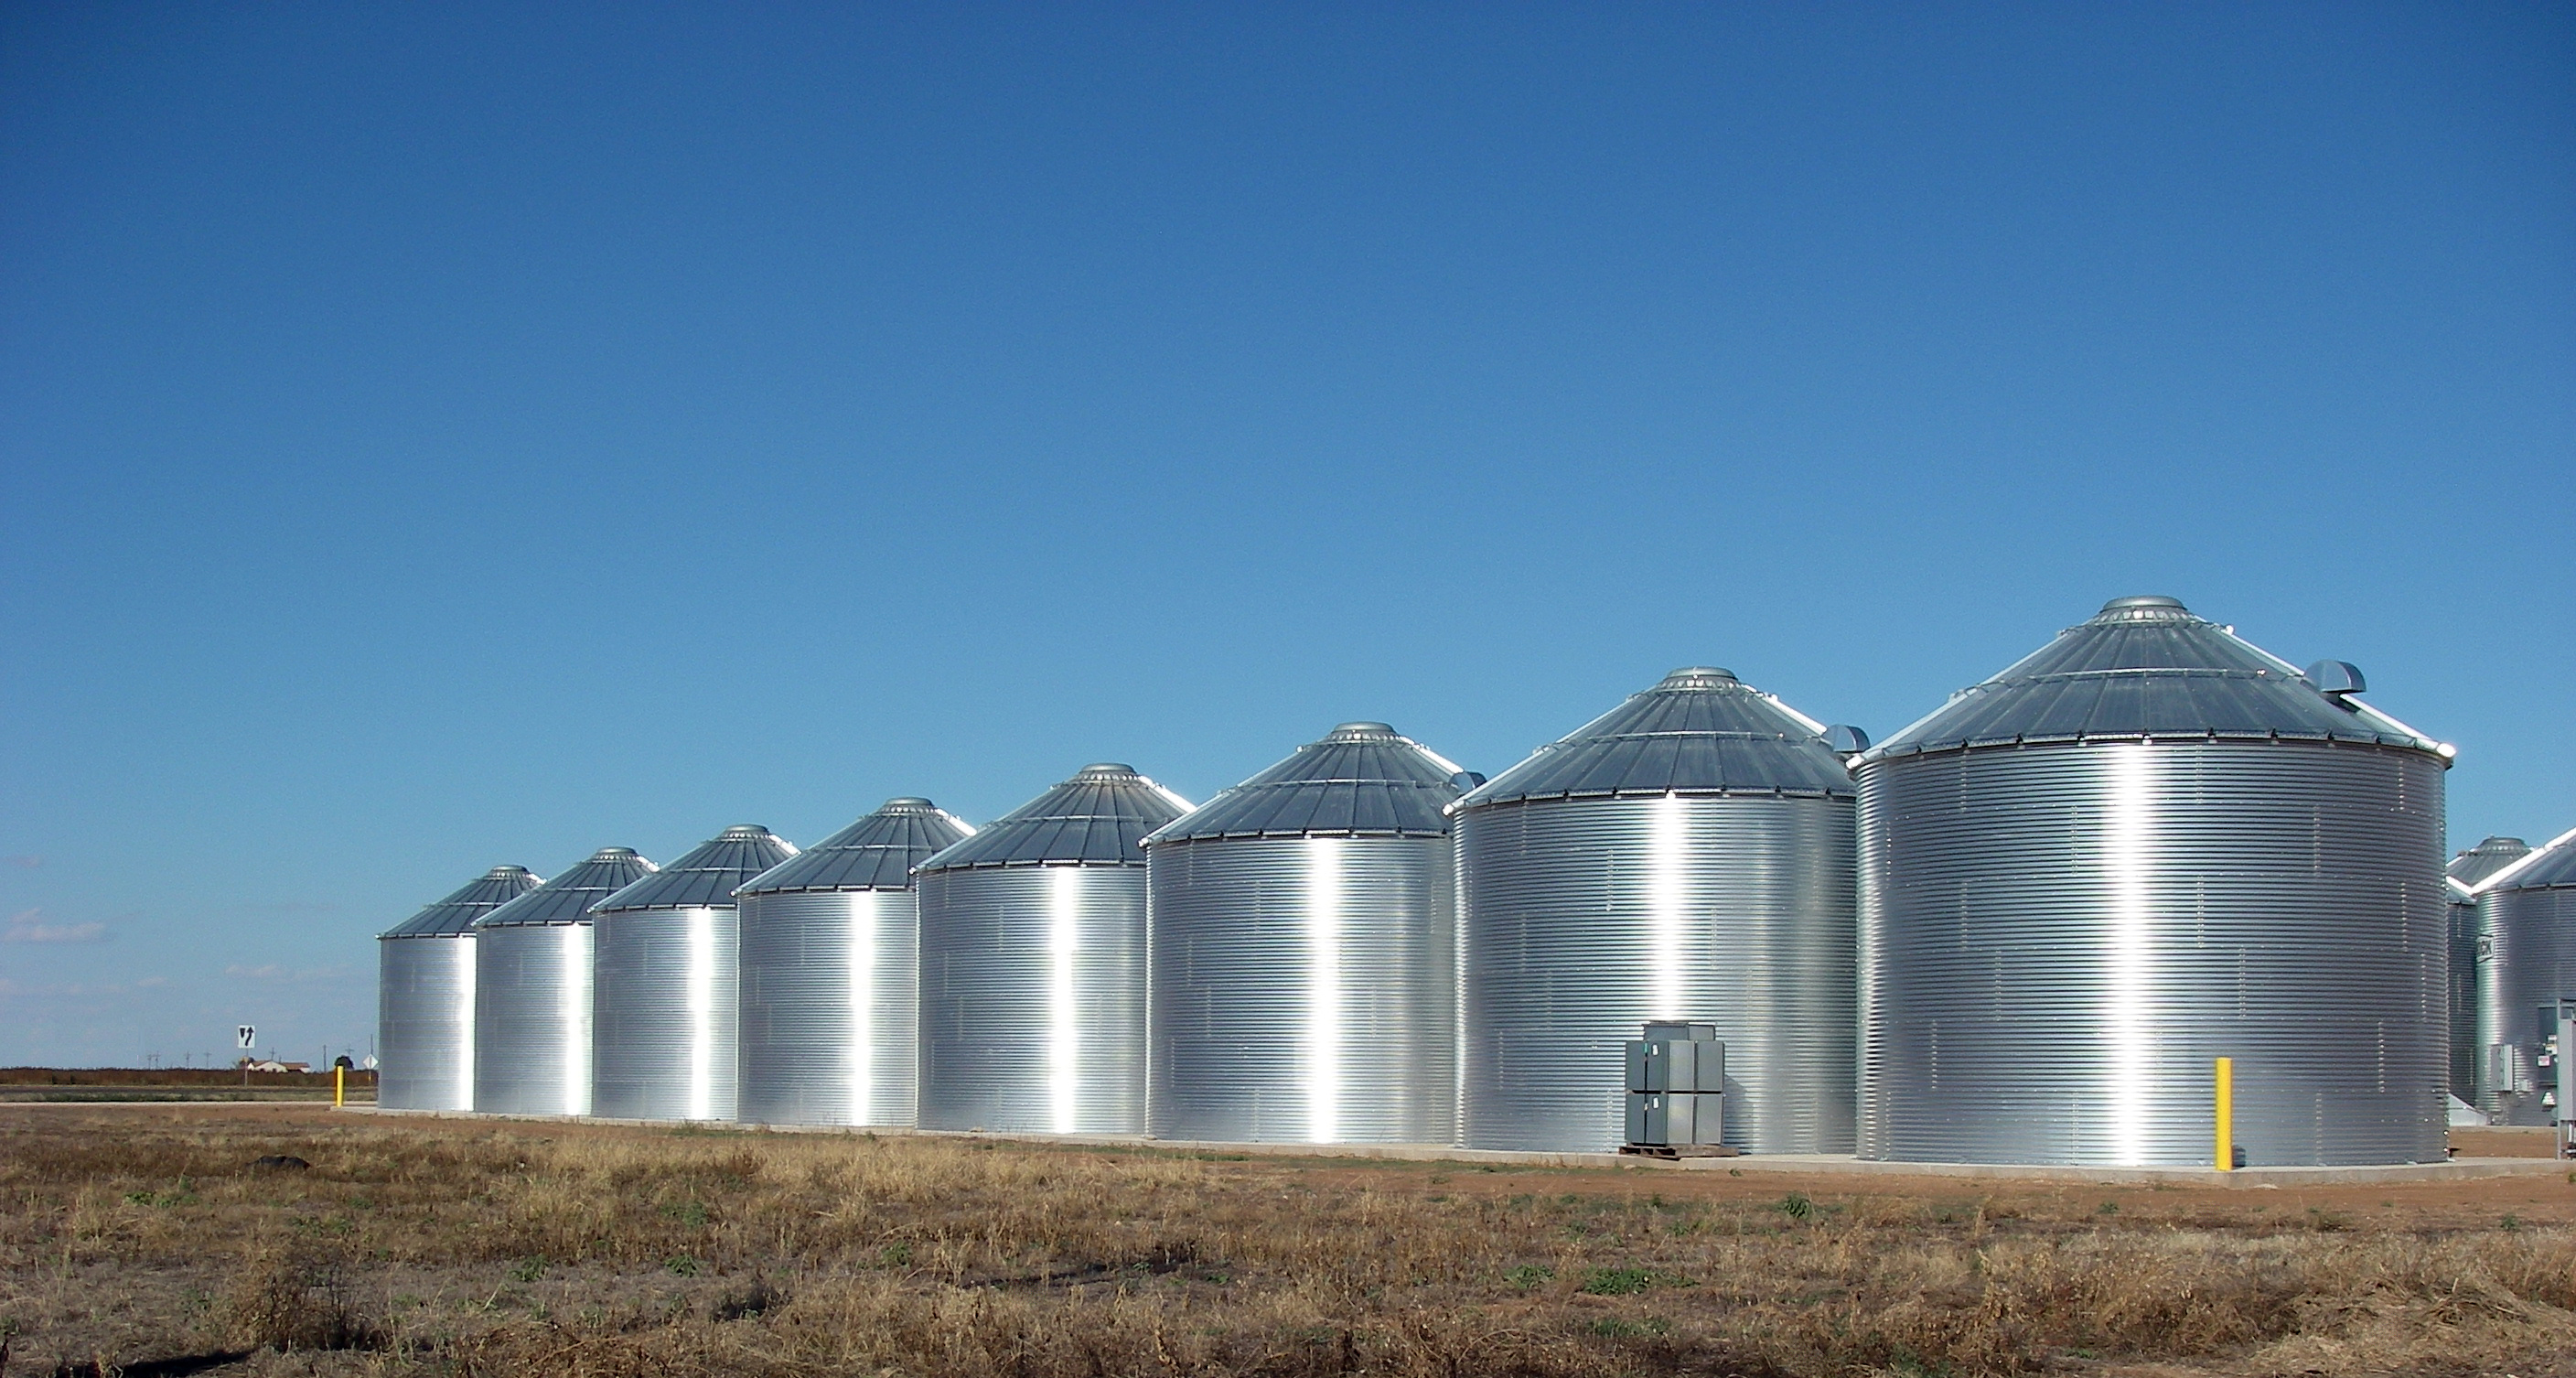 File:Ralls Texas Grain Silos 2010.jpg - Wikimedia Commons